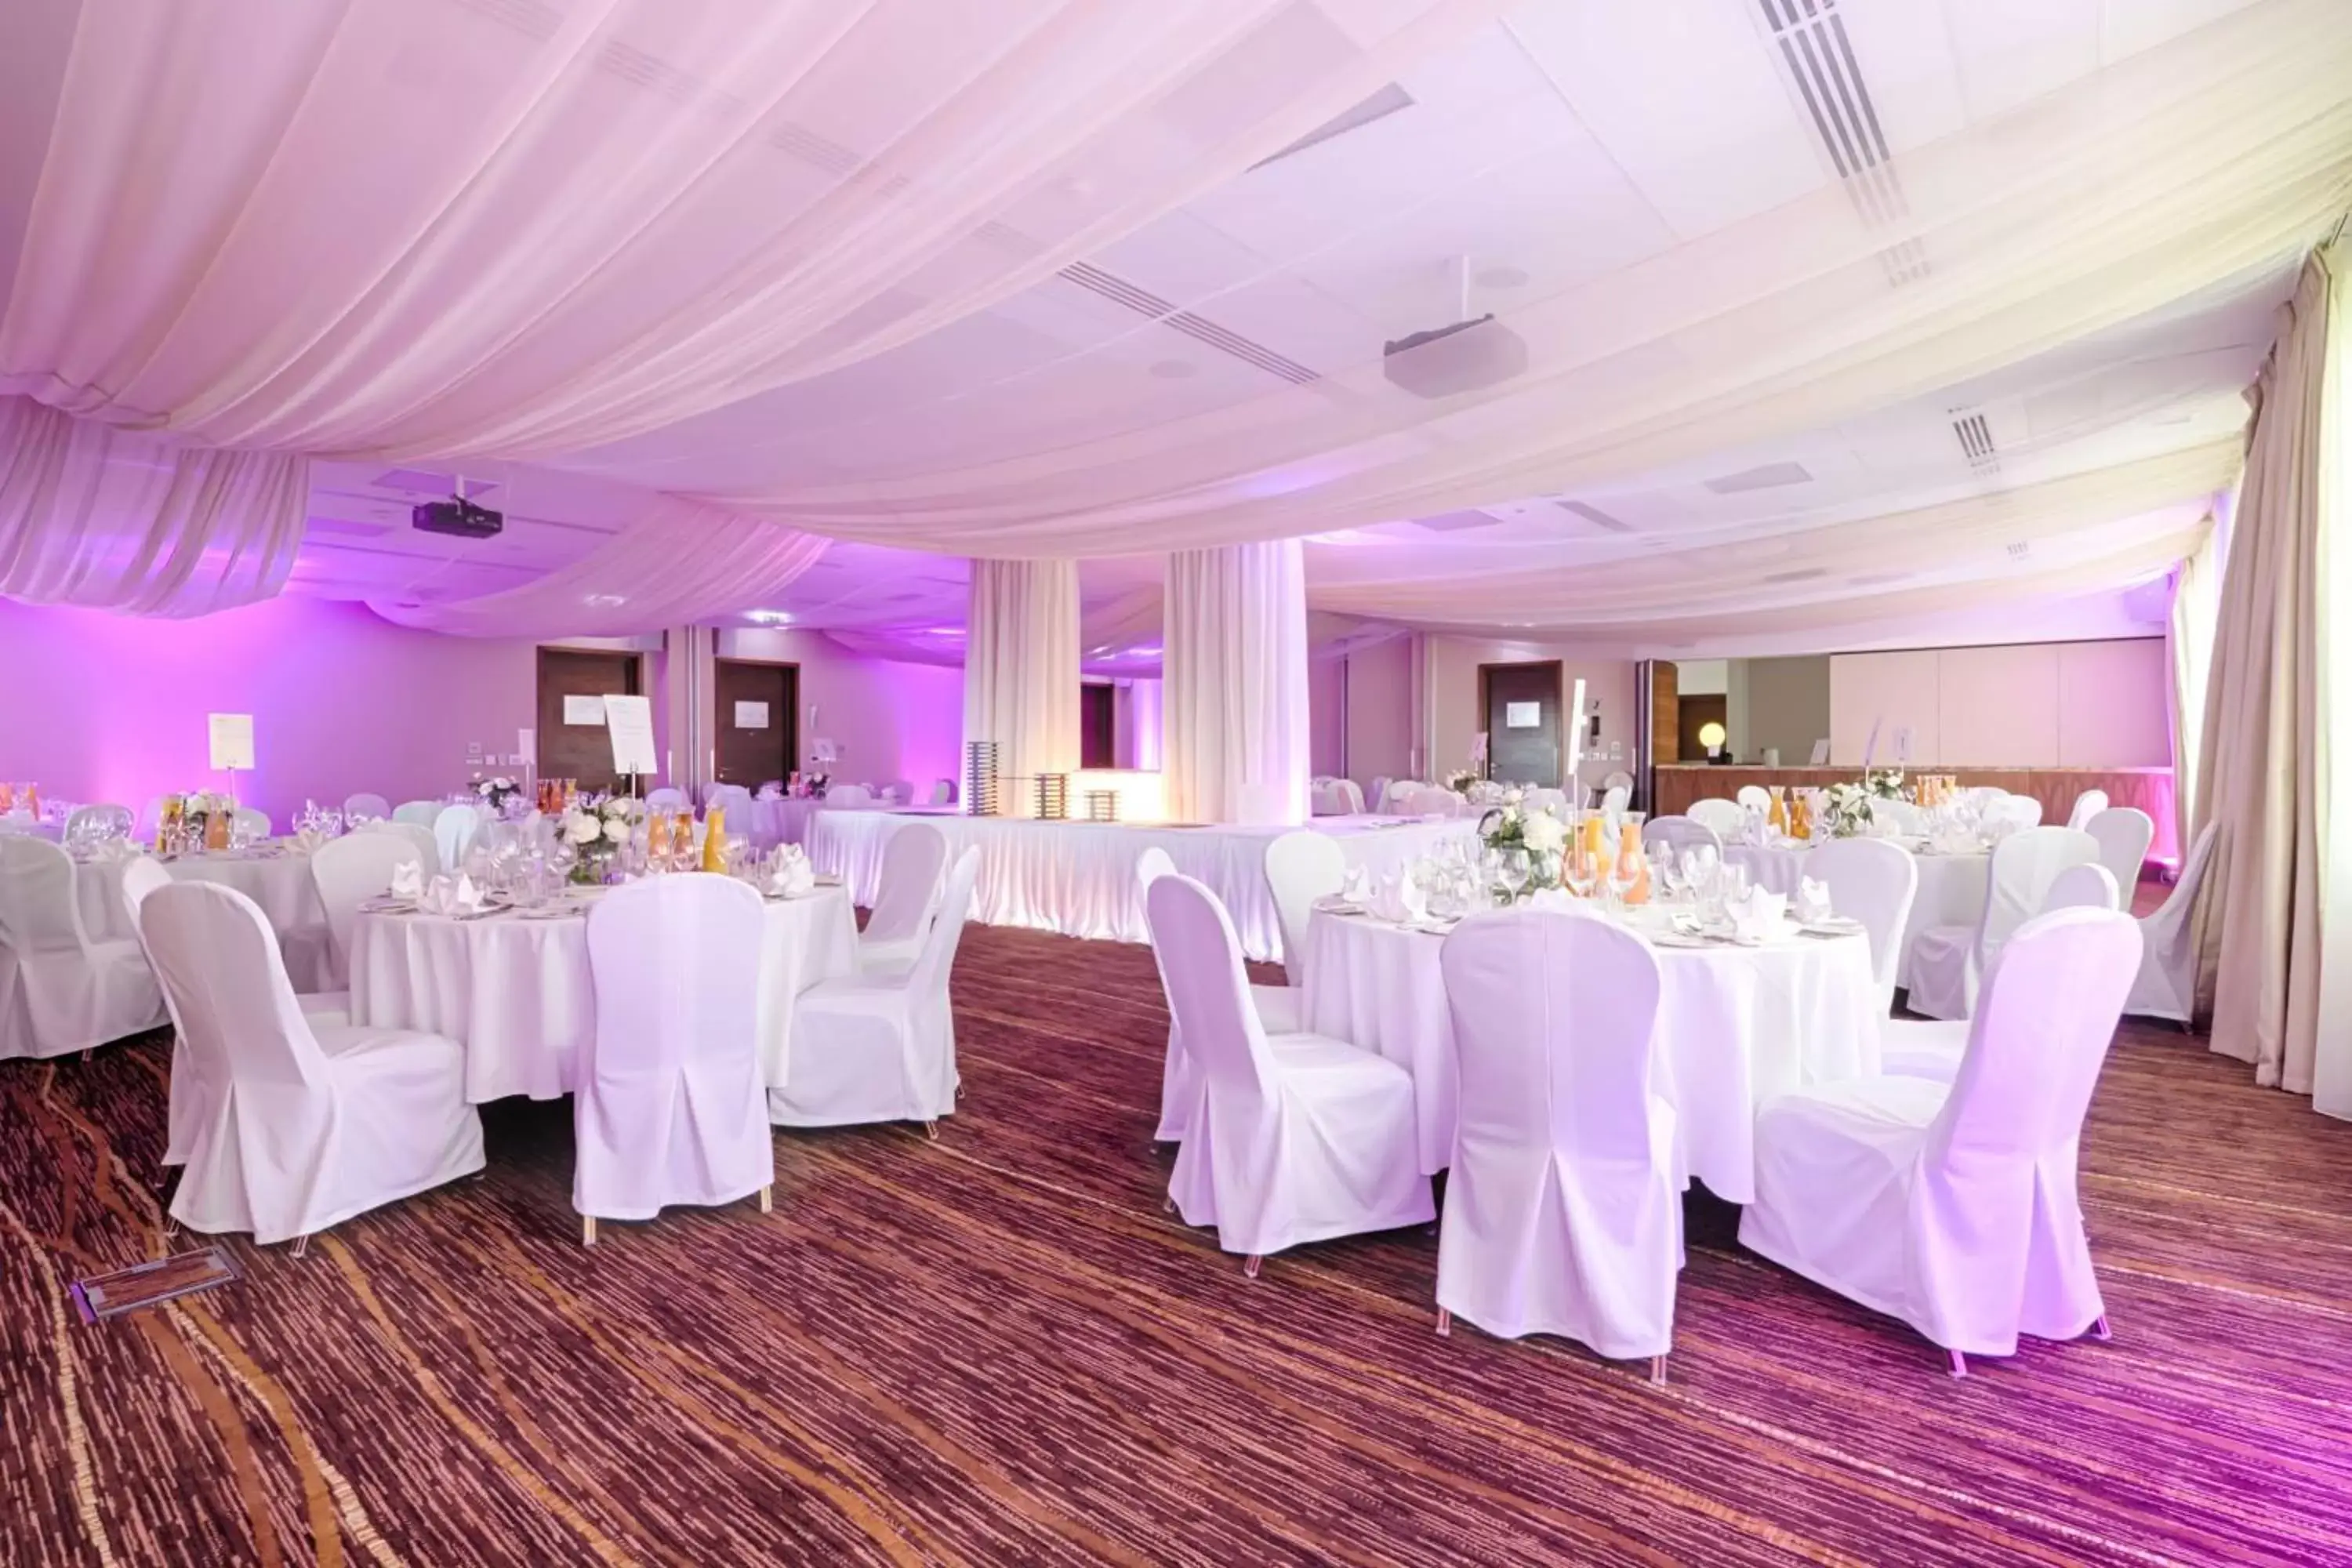 Meeting/conference room, Banquet Facilities in Hilton Garden Inn Krakow